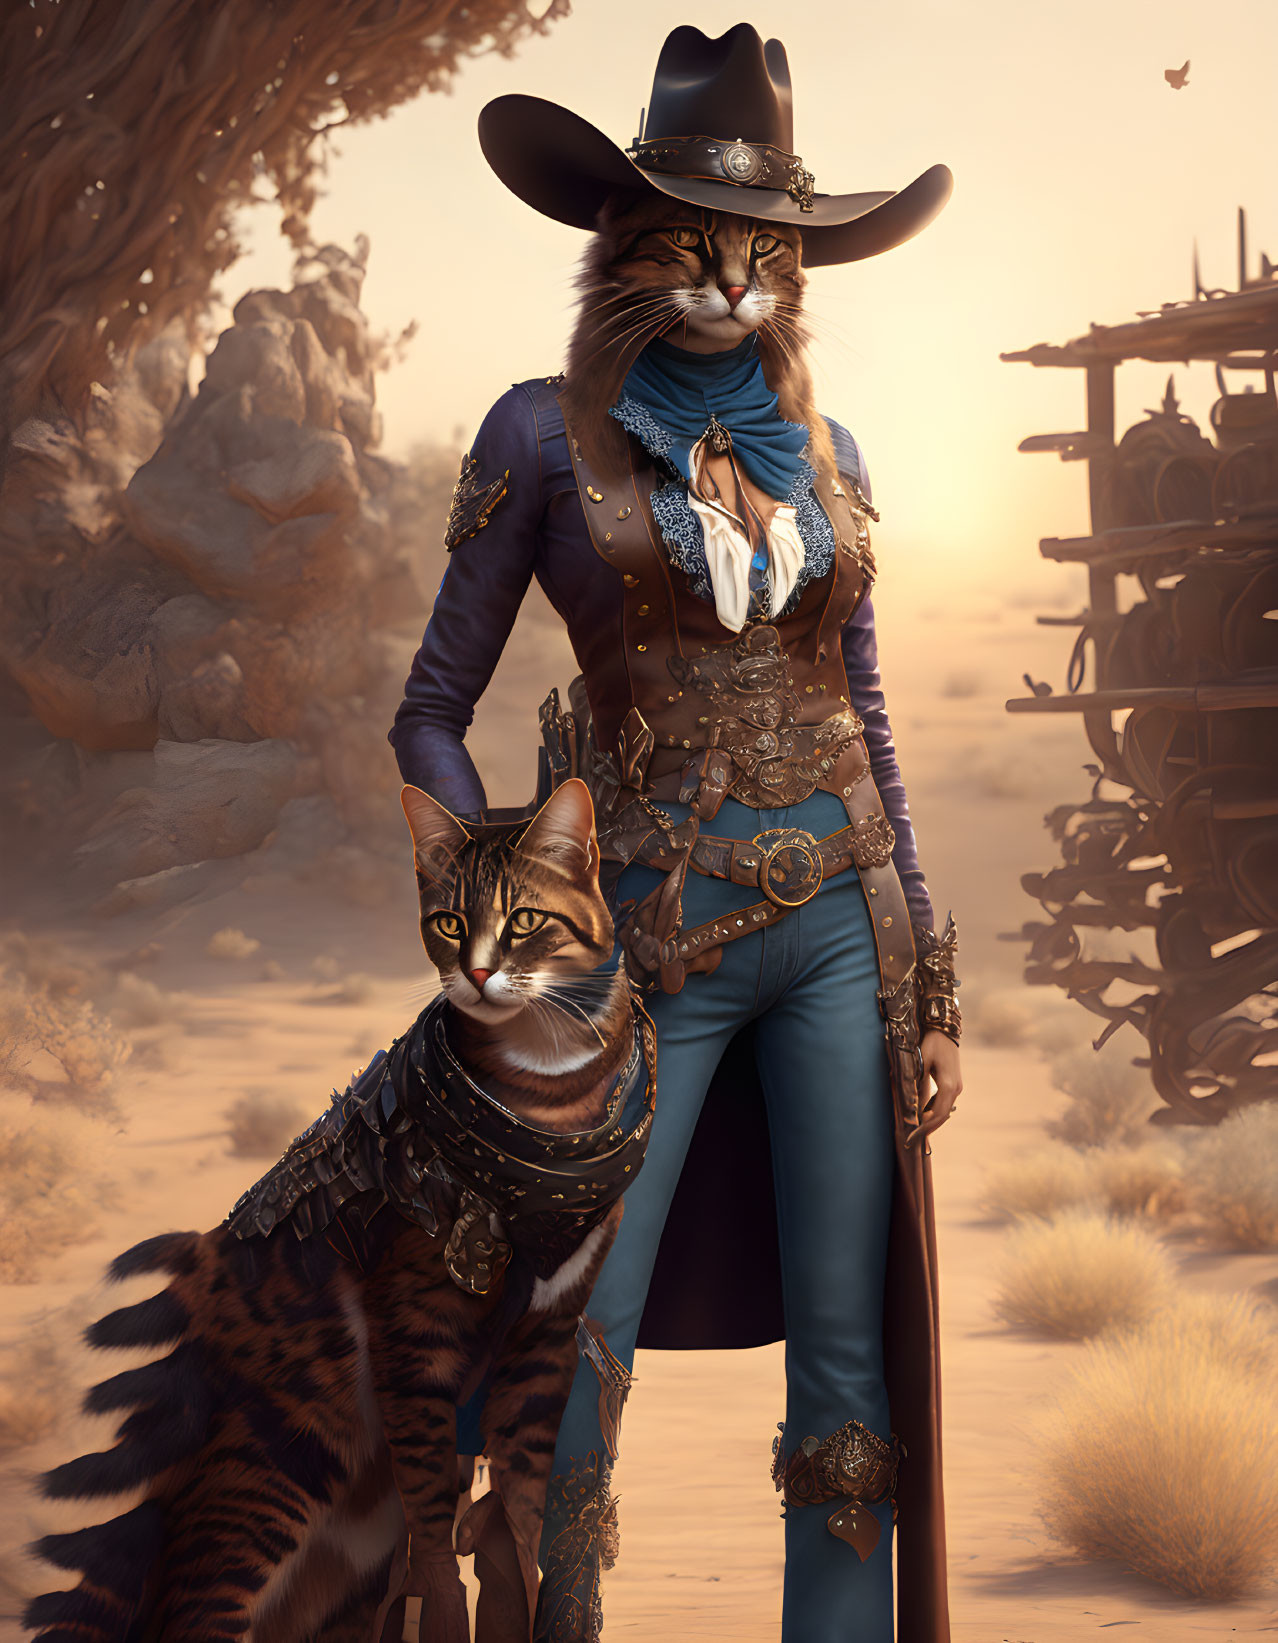 Anthropomorphic cats in western attire with steampunk vehicle in desert